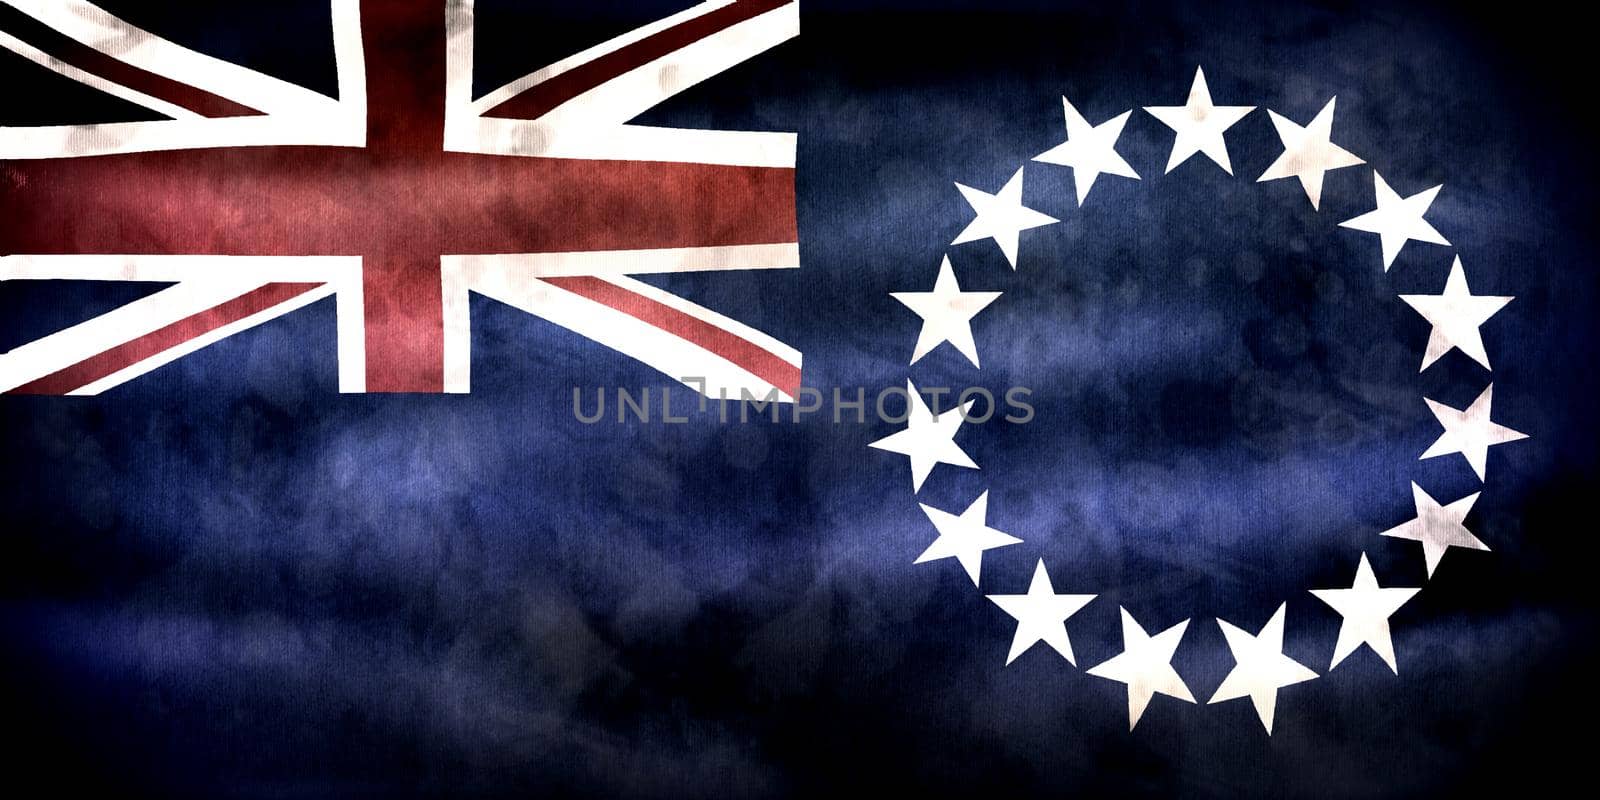 Cook Islands flag - realistic waving fabric flag